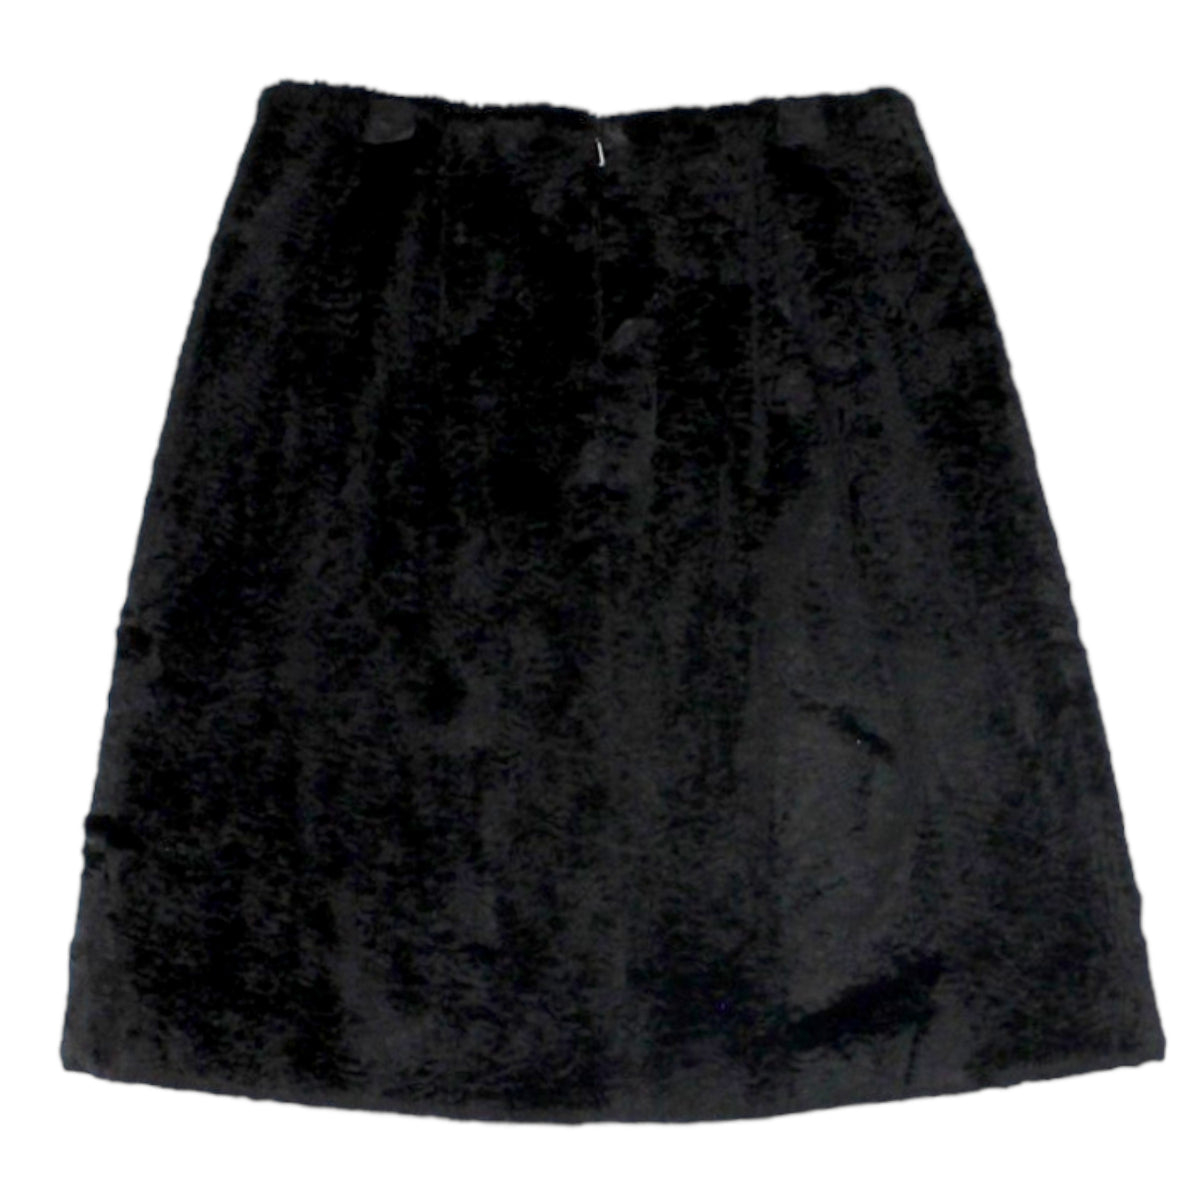 Orla Kiely Black Furry Mini Skirt